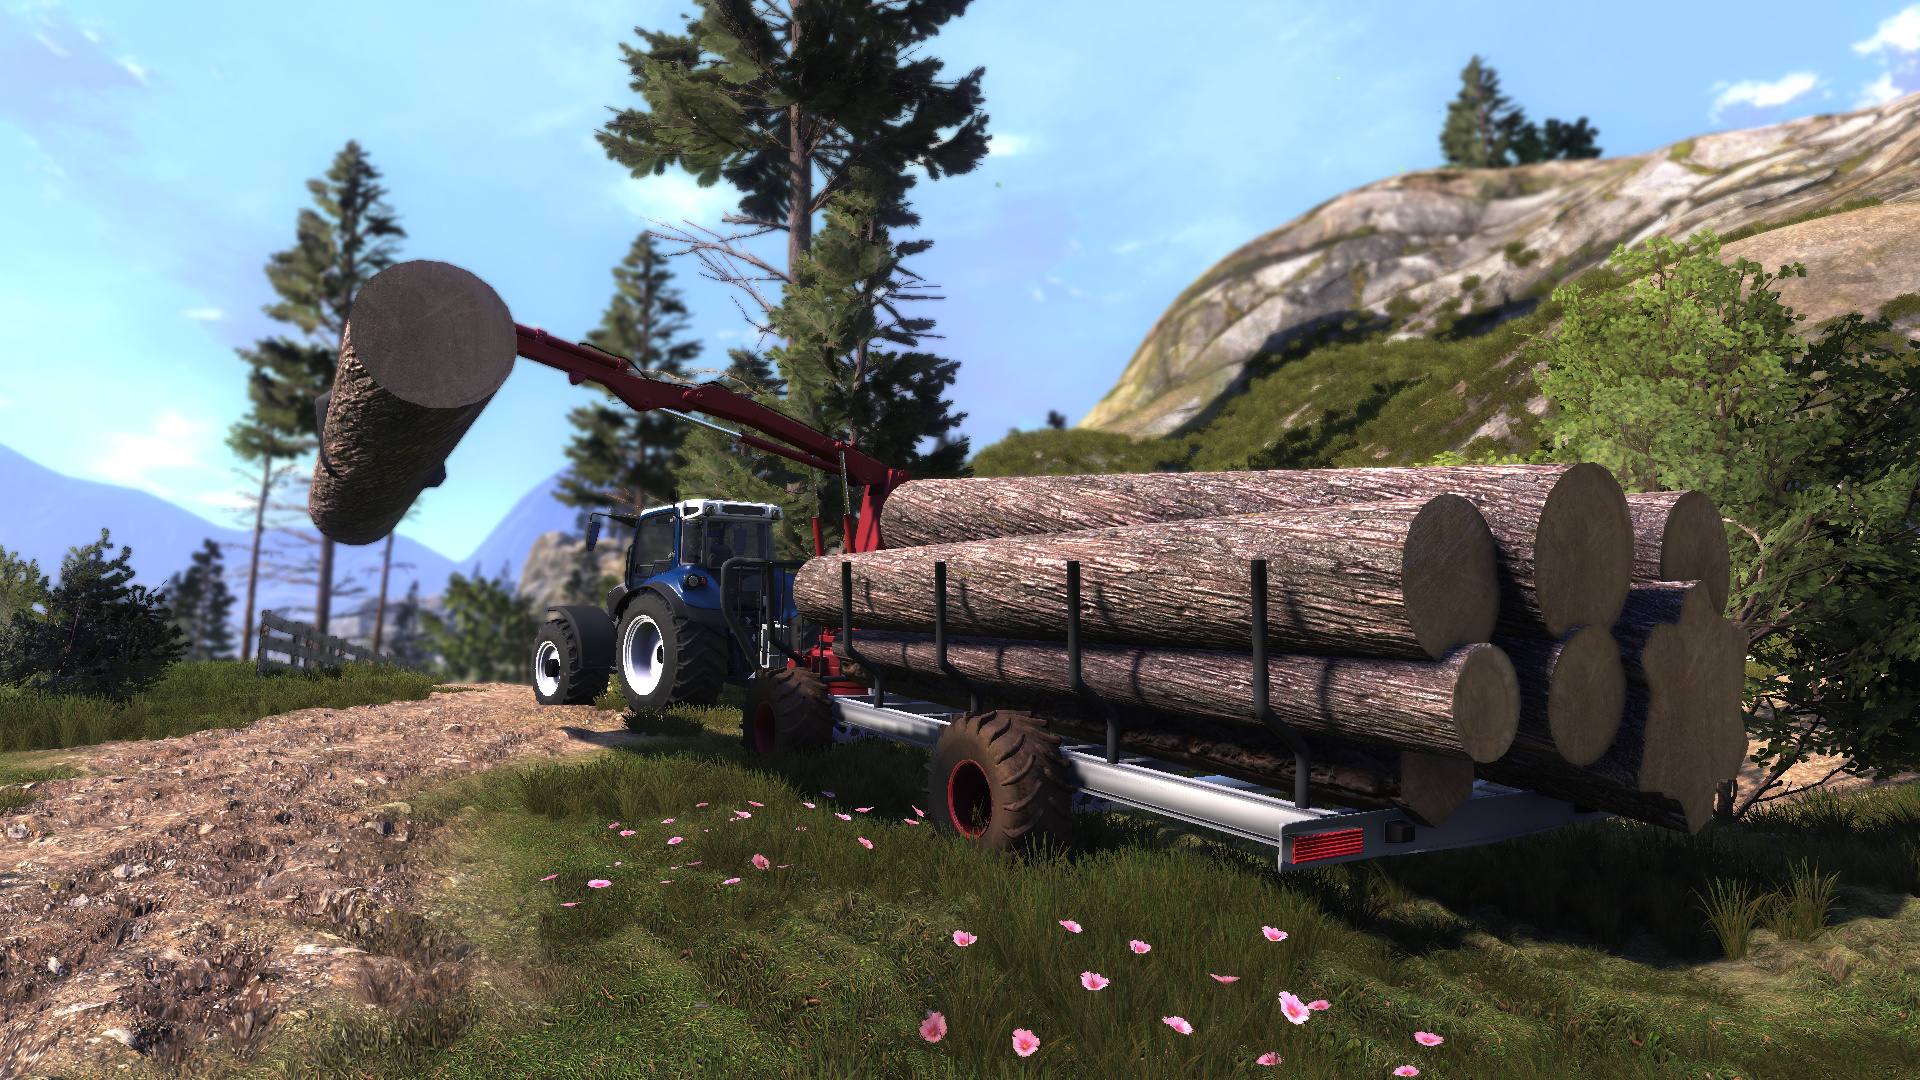 Lumberjack: Lumberjack's Dynasty, Harvesting trees, Logging industry, Woodchopping. 1920x1080 Full HD Background.